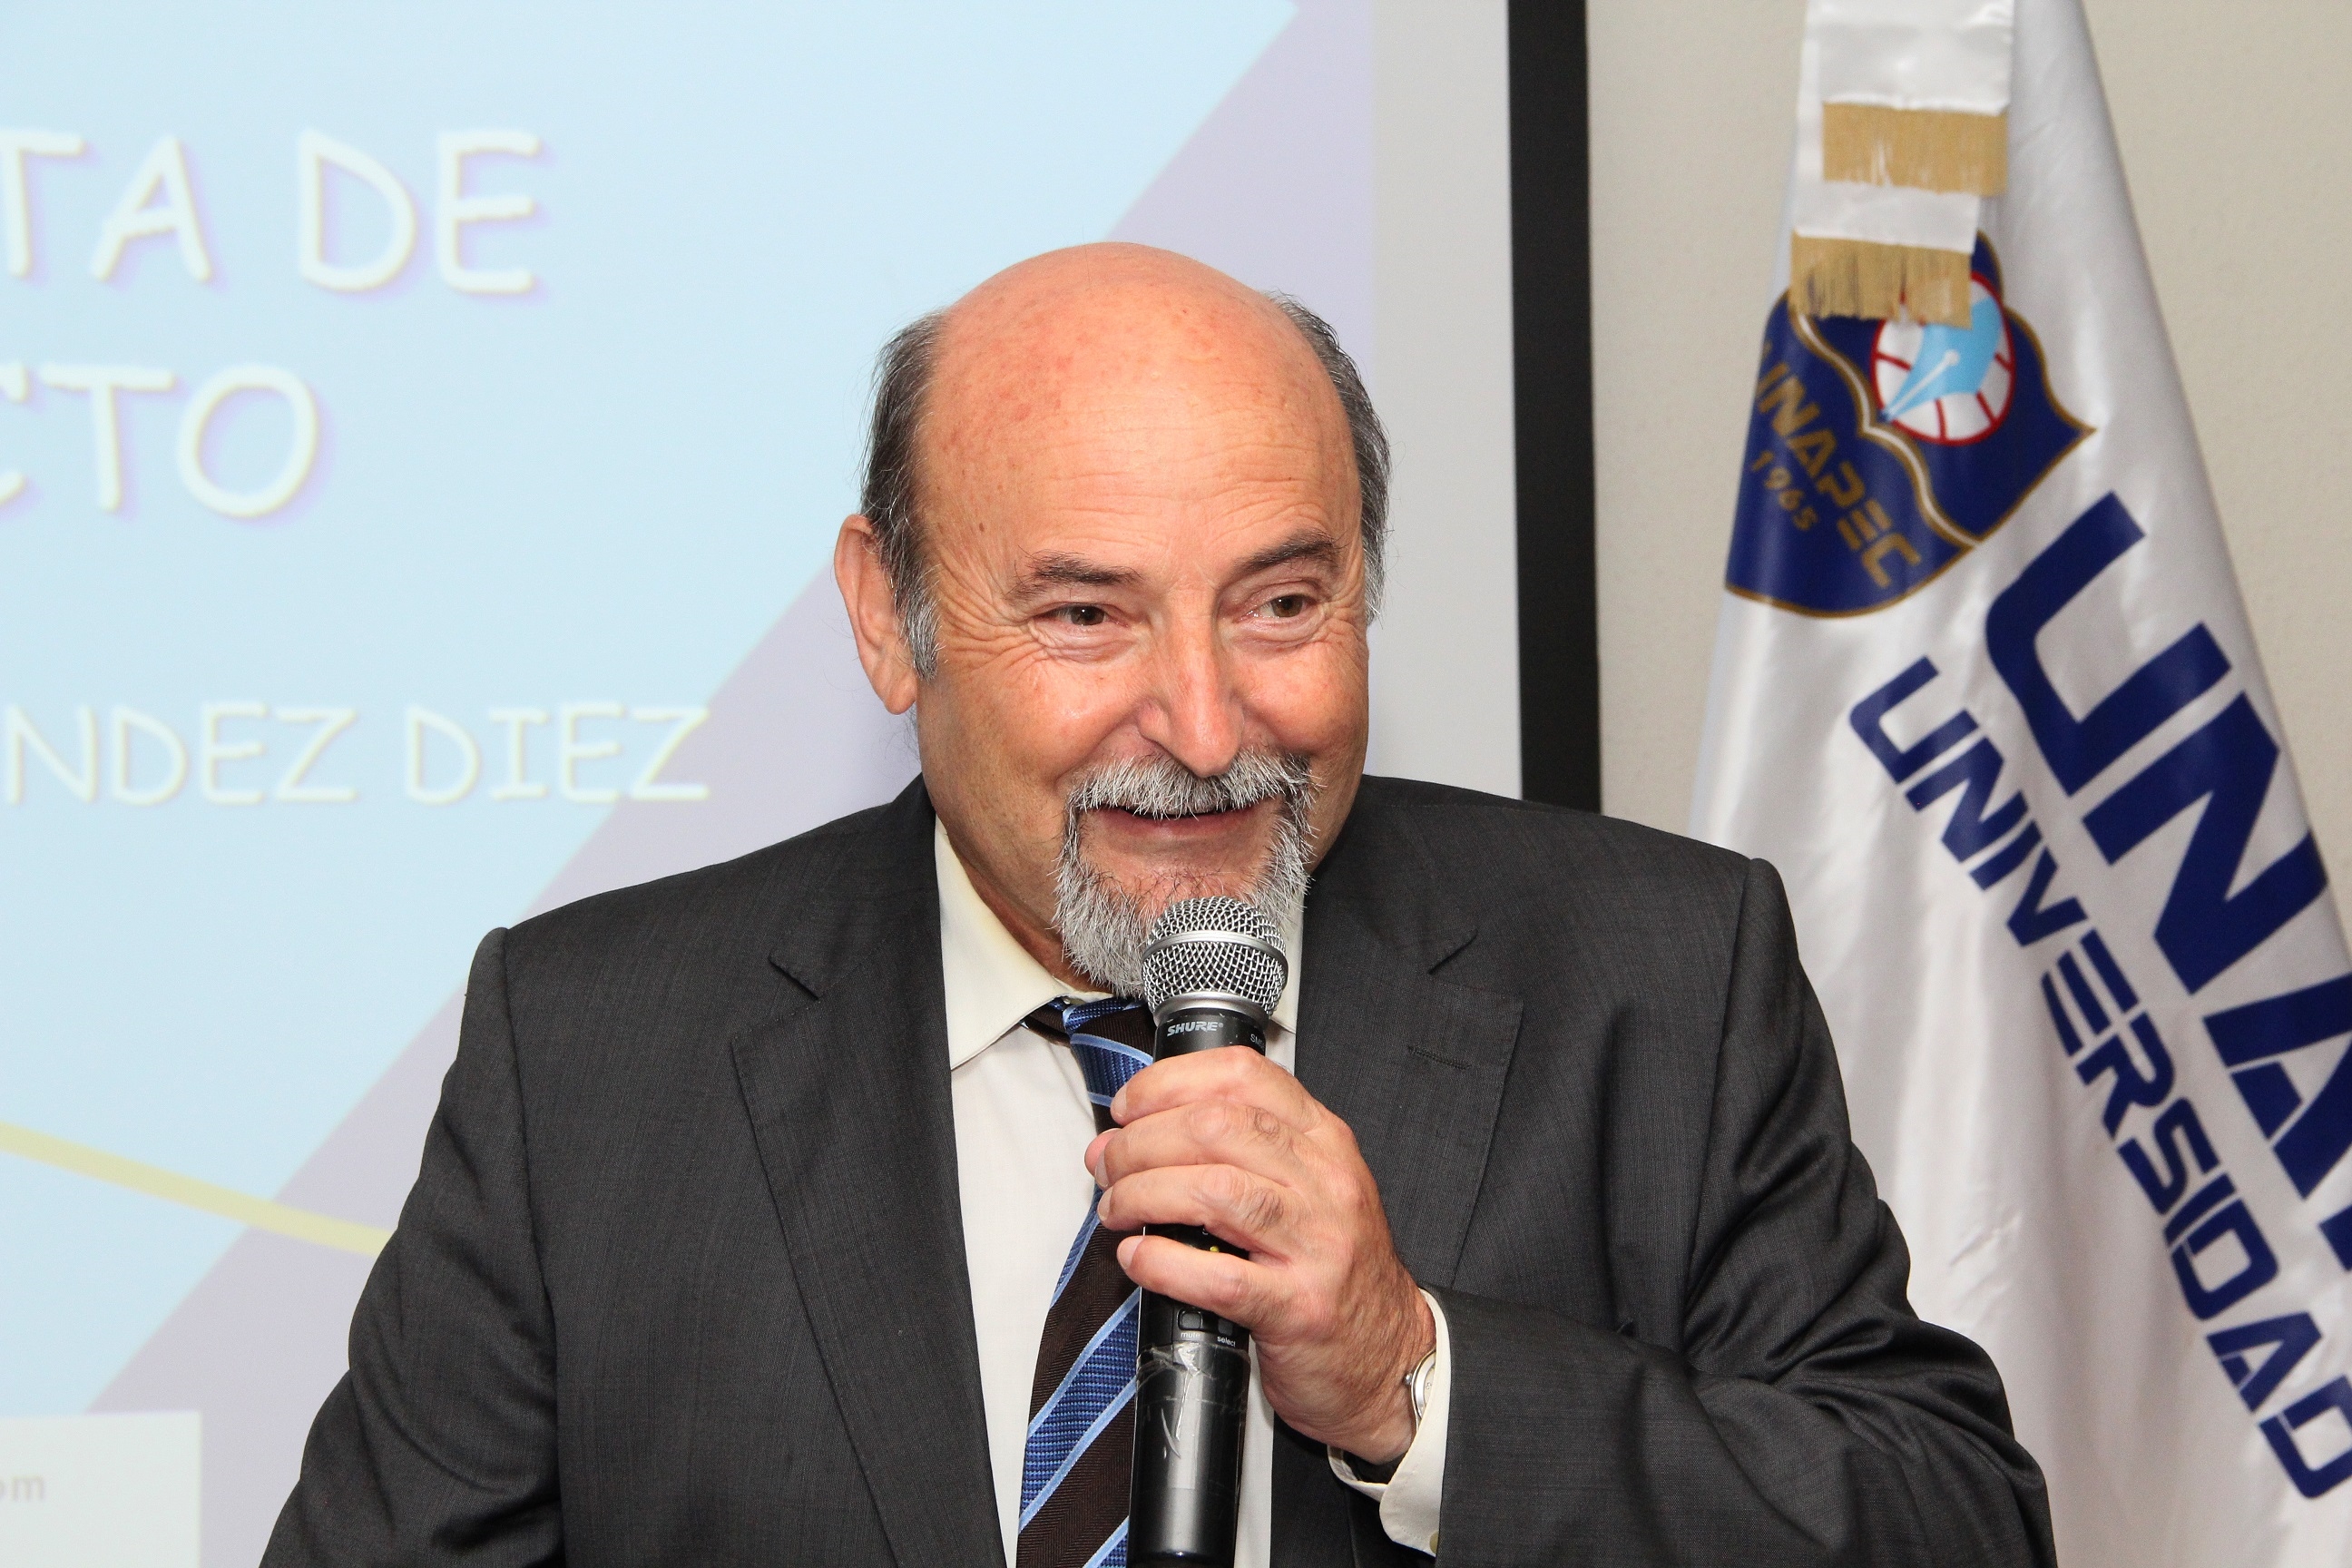 Dr. Federico Fernández Díez